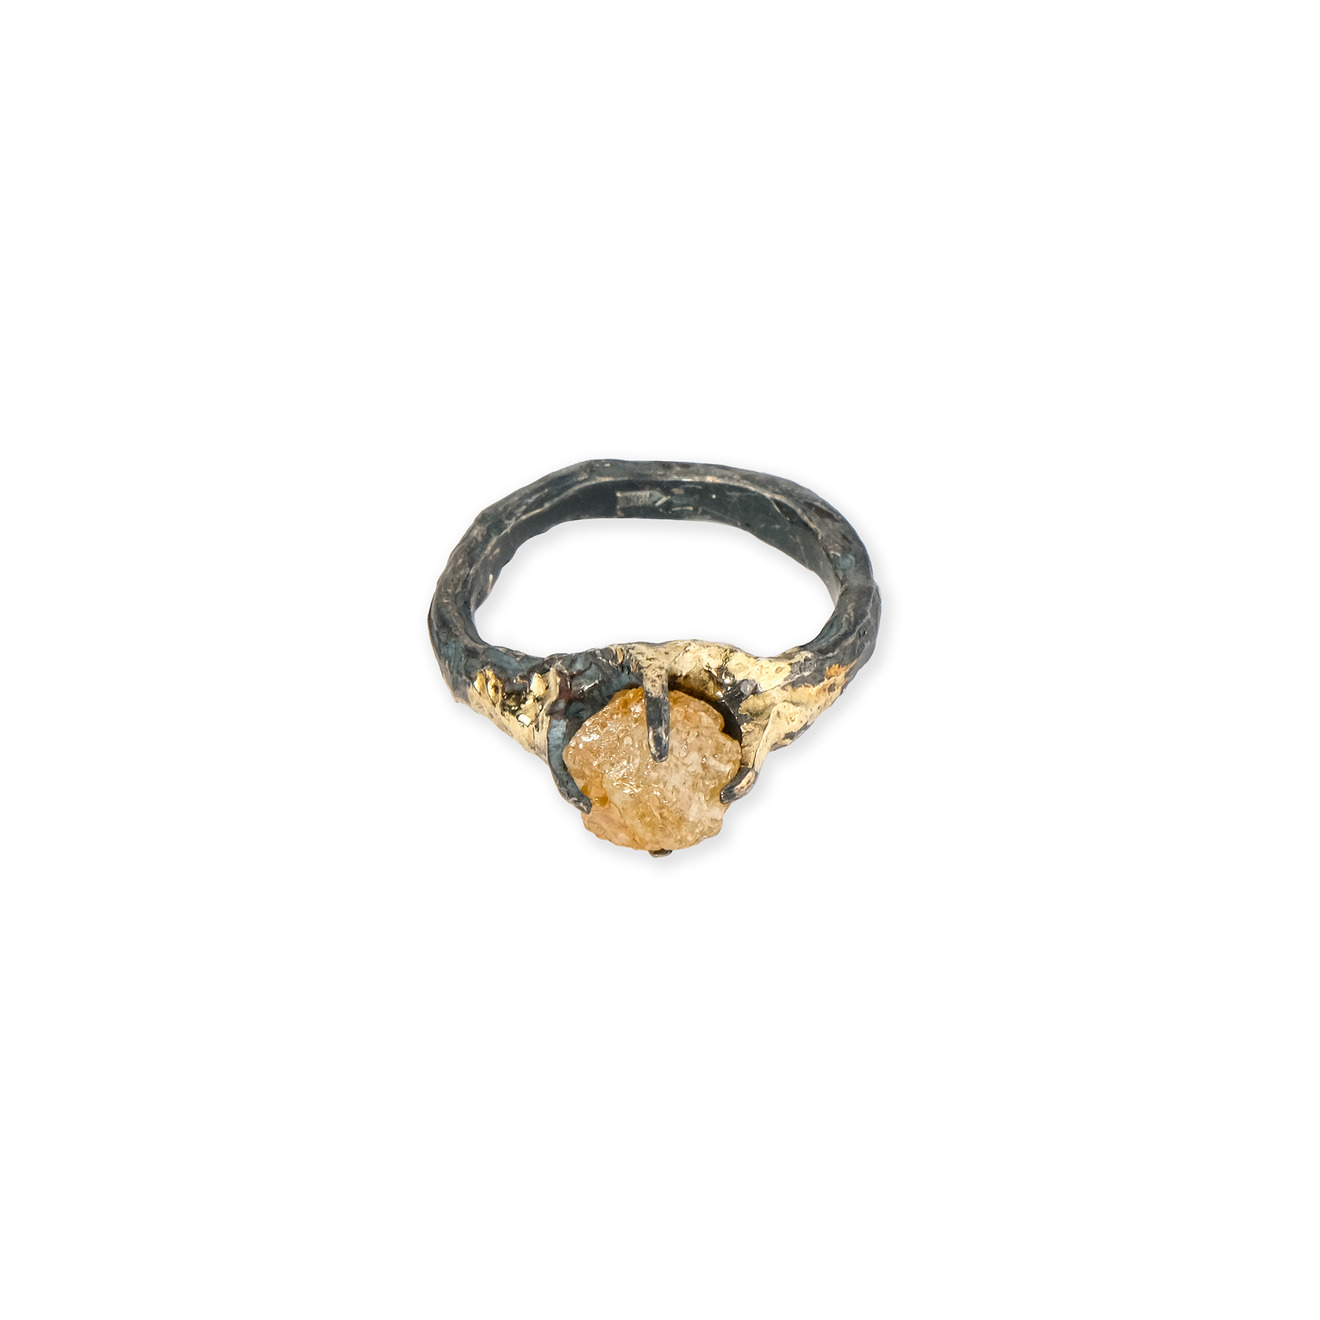 kintsugi jewelry кольцо rough diamond из золота с кристаллом кварца Kintsugi Jewelry Кольцо Wild power из серебра с позолотой и кристаллом кварца